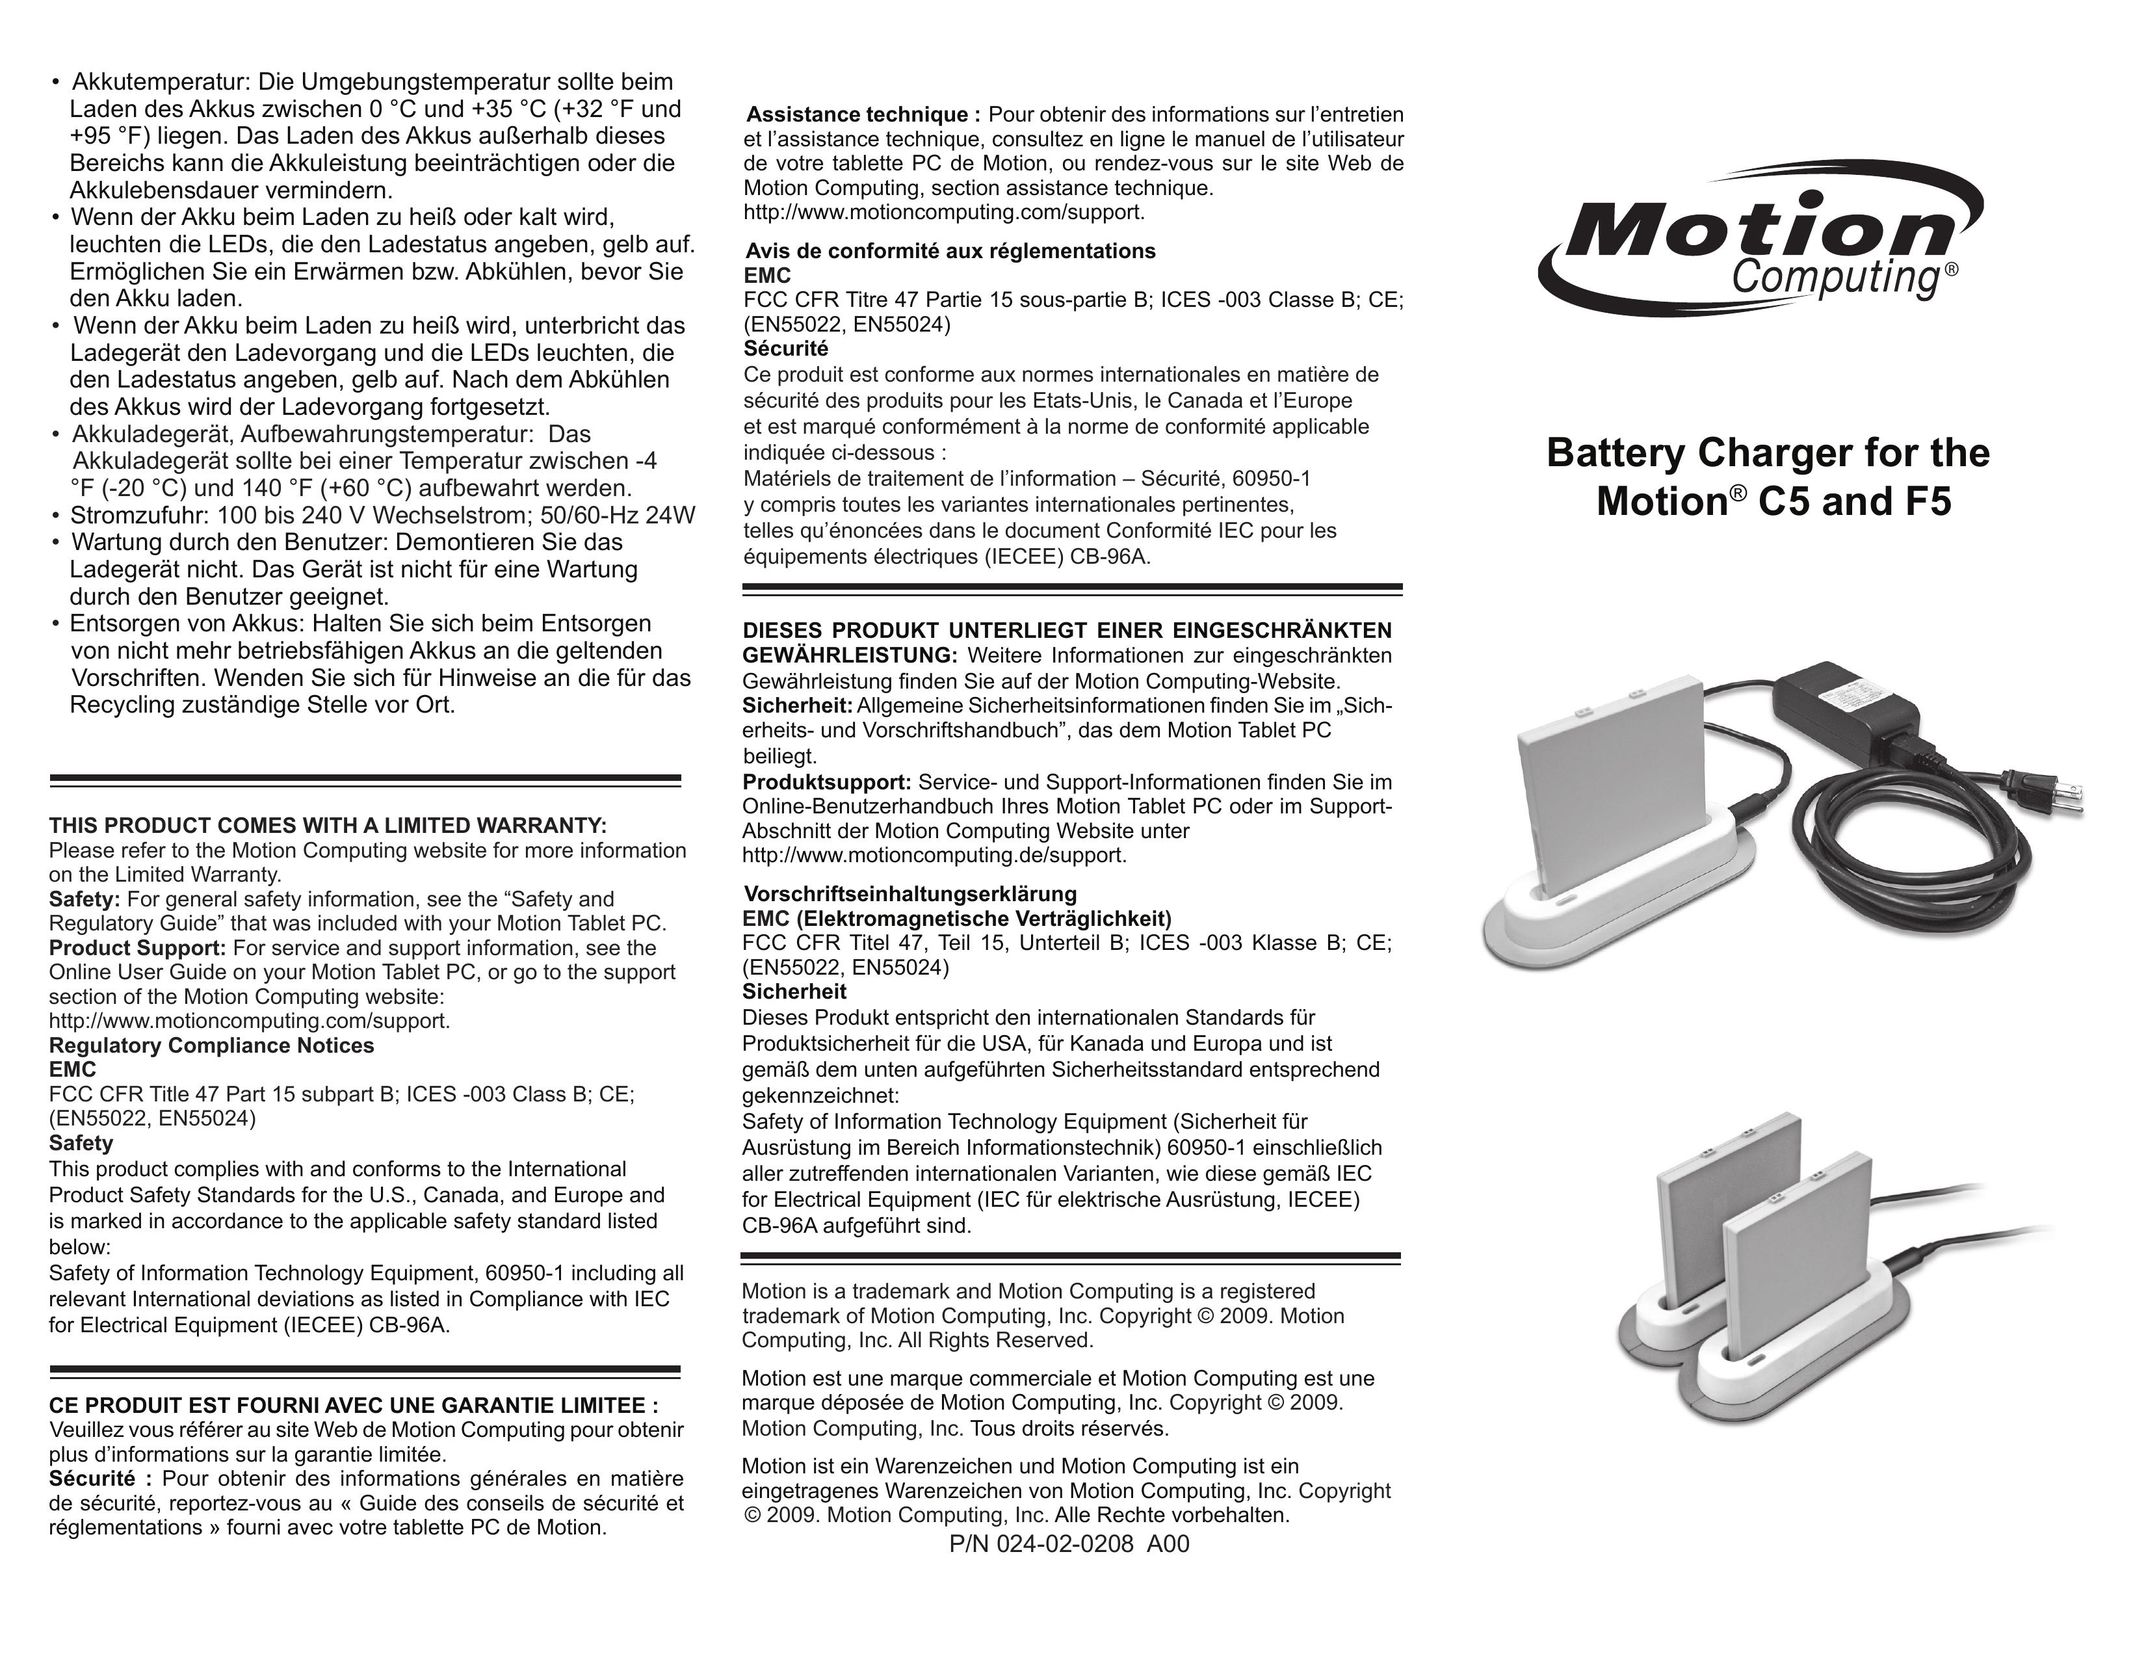 Motion Computing F5 Tablet User Manual